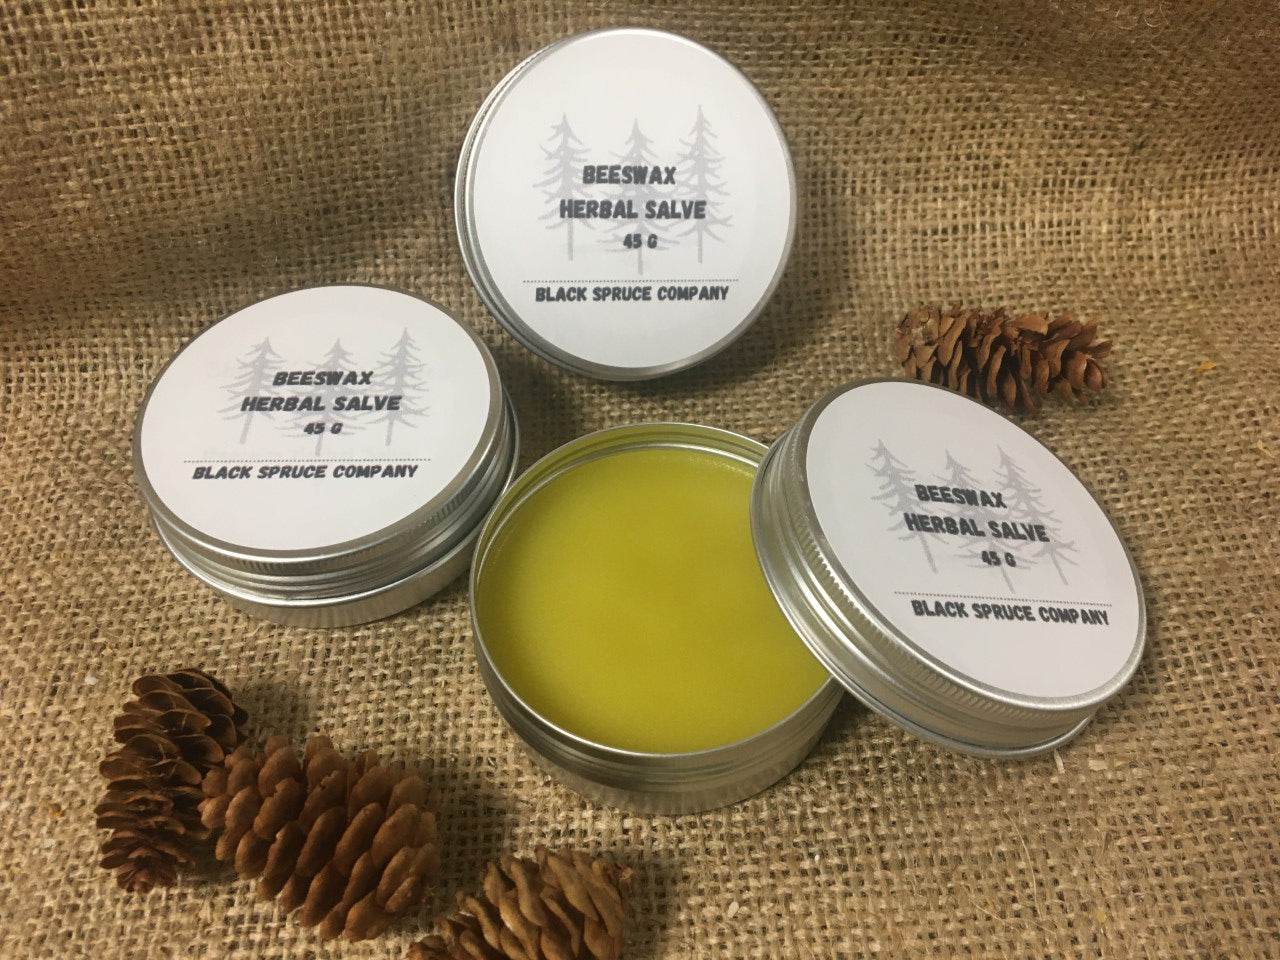 Beeswax Herbal Salve in tin